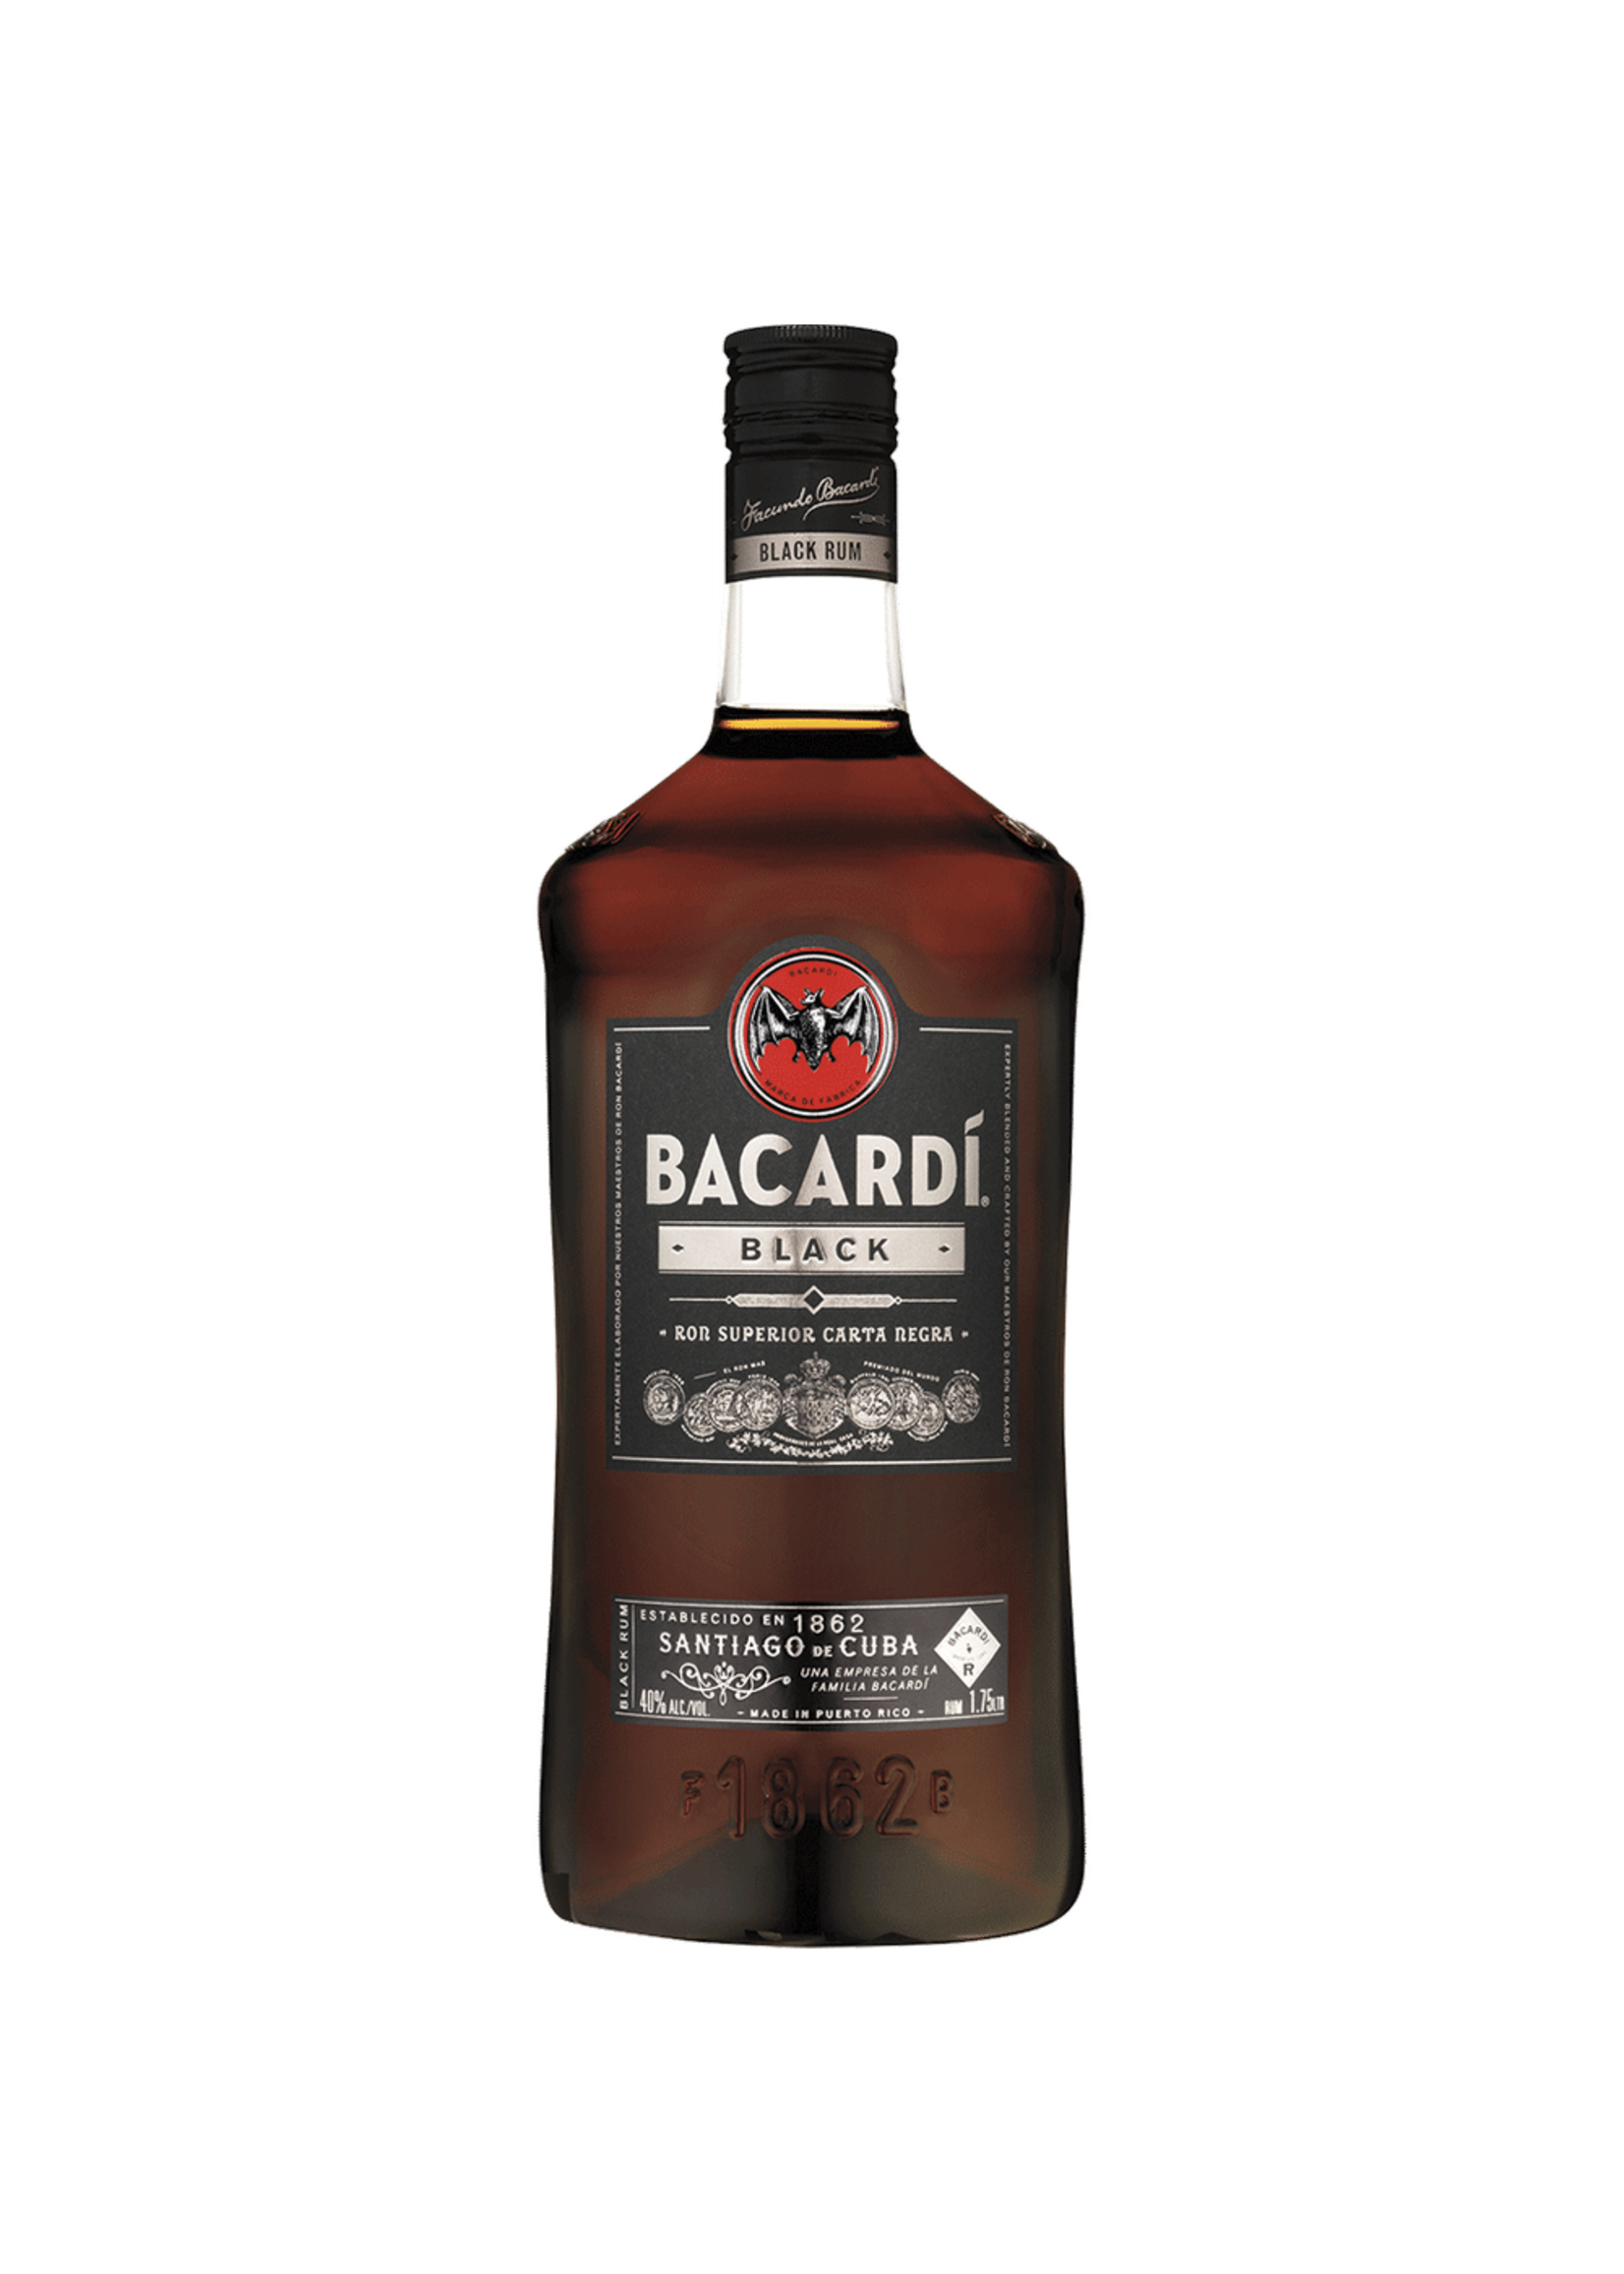 Bacardi Bacardi Black Rum 80Proof 1.75 Ltr